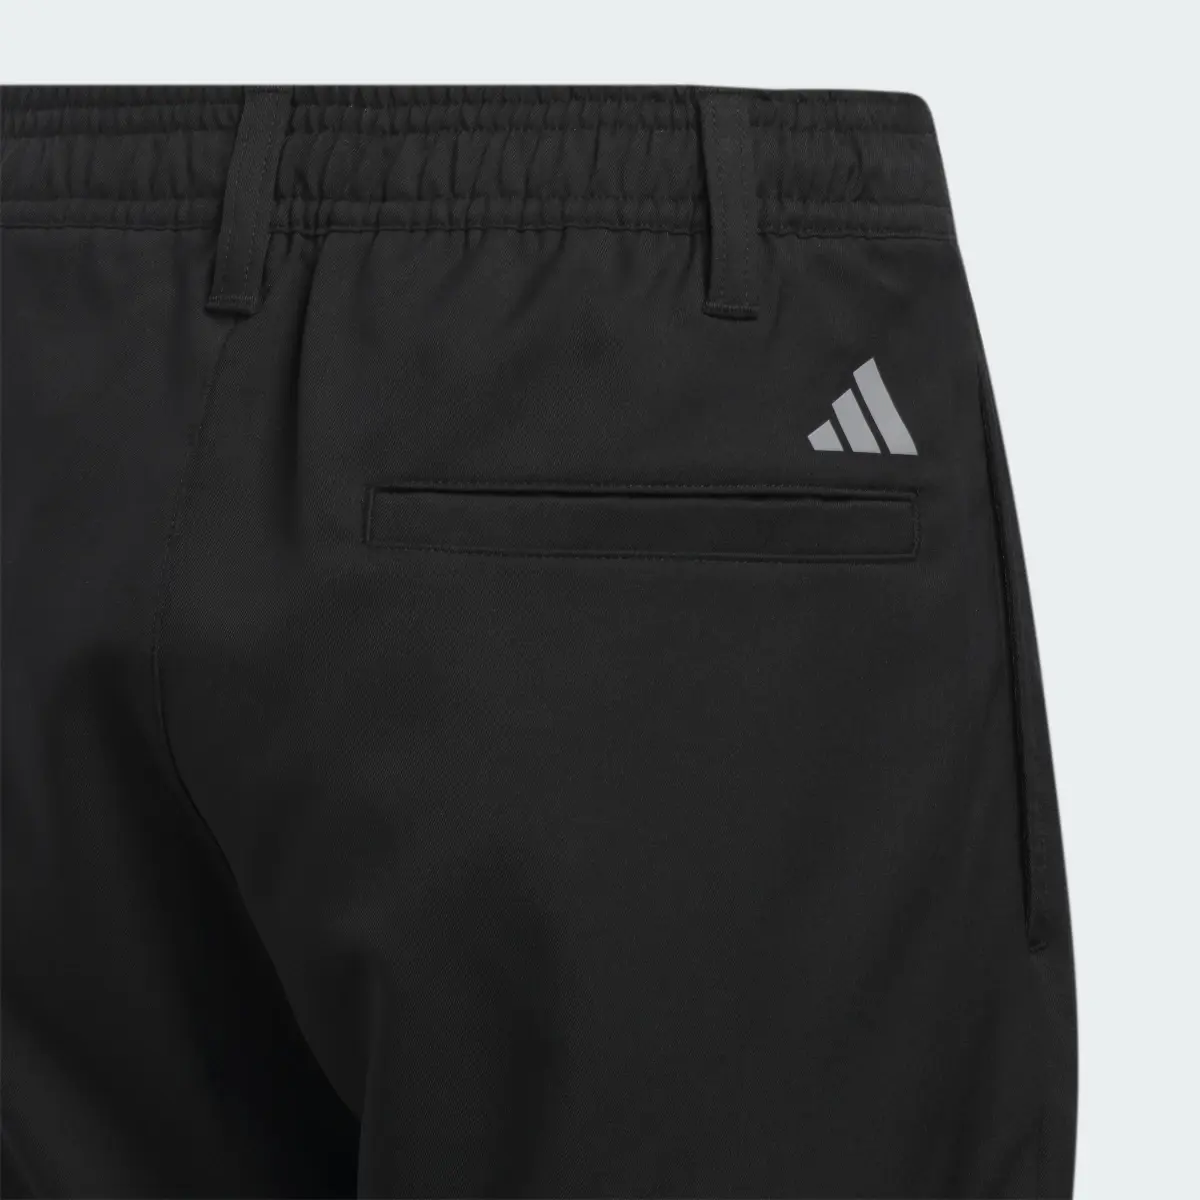 Adidas Ultimate365 Adjustable Kids Shorts. 3